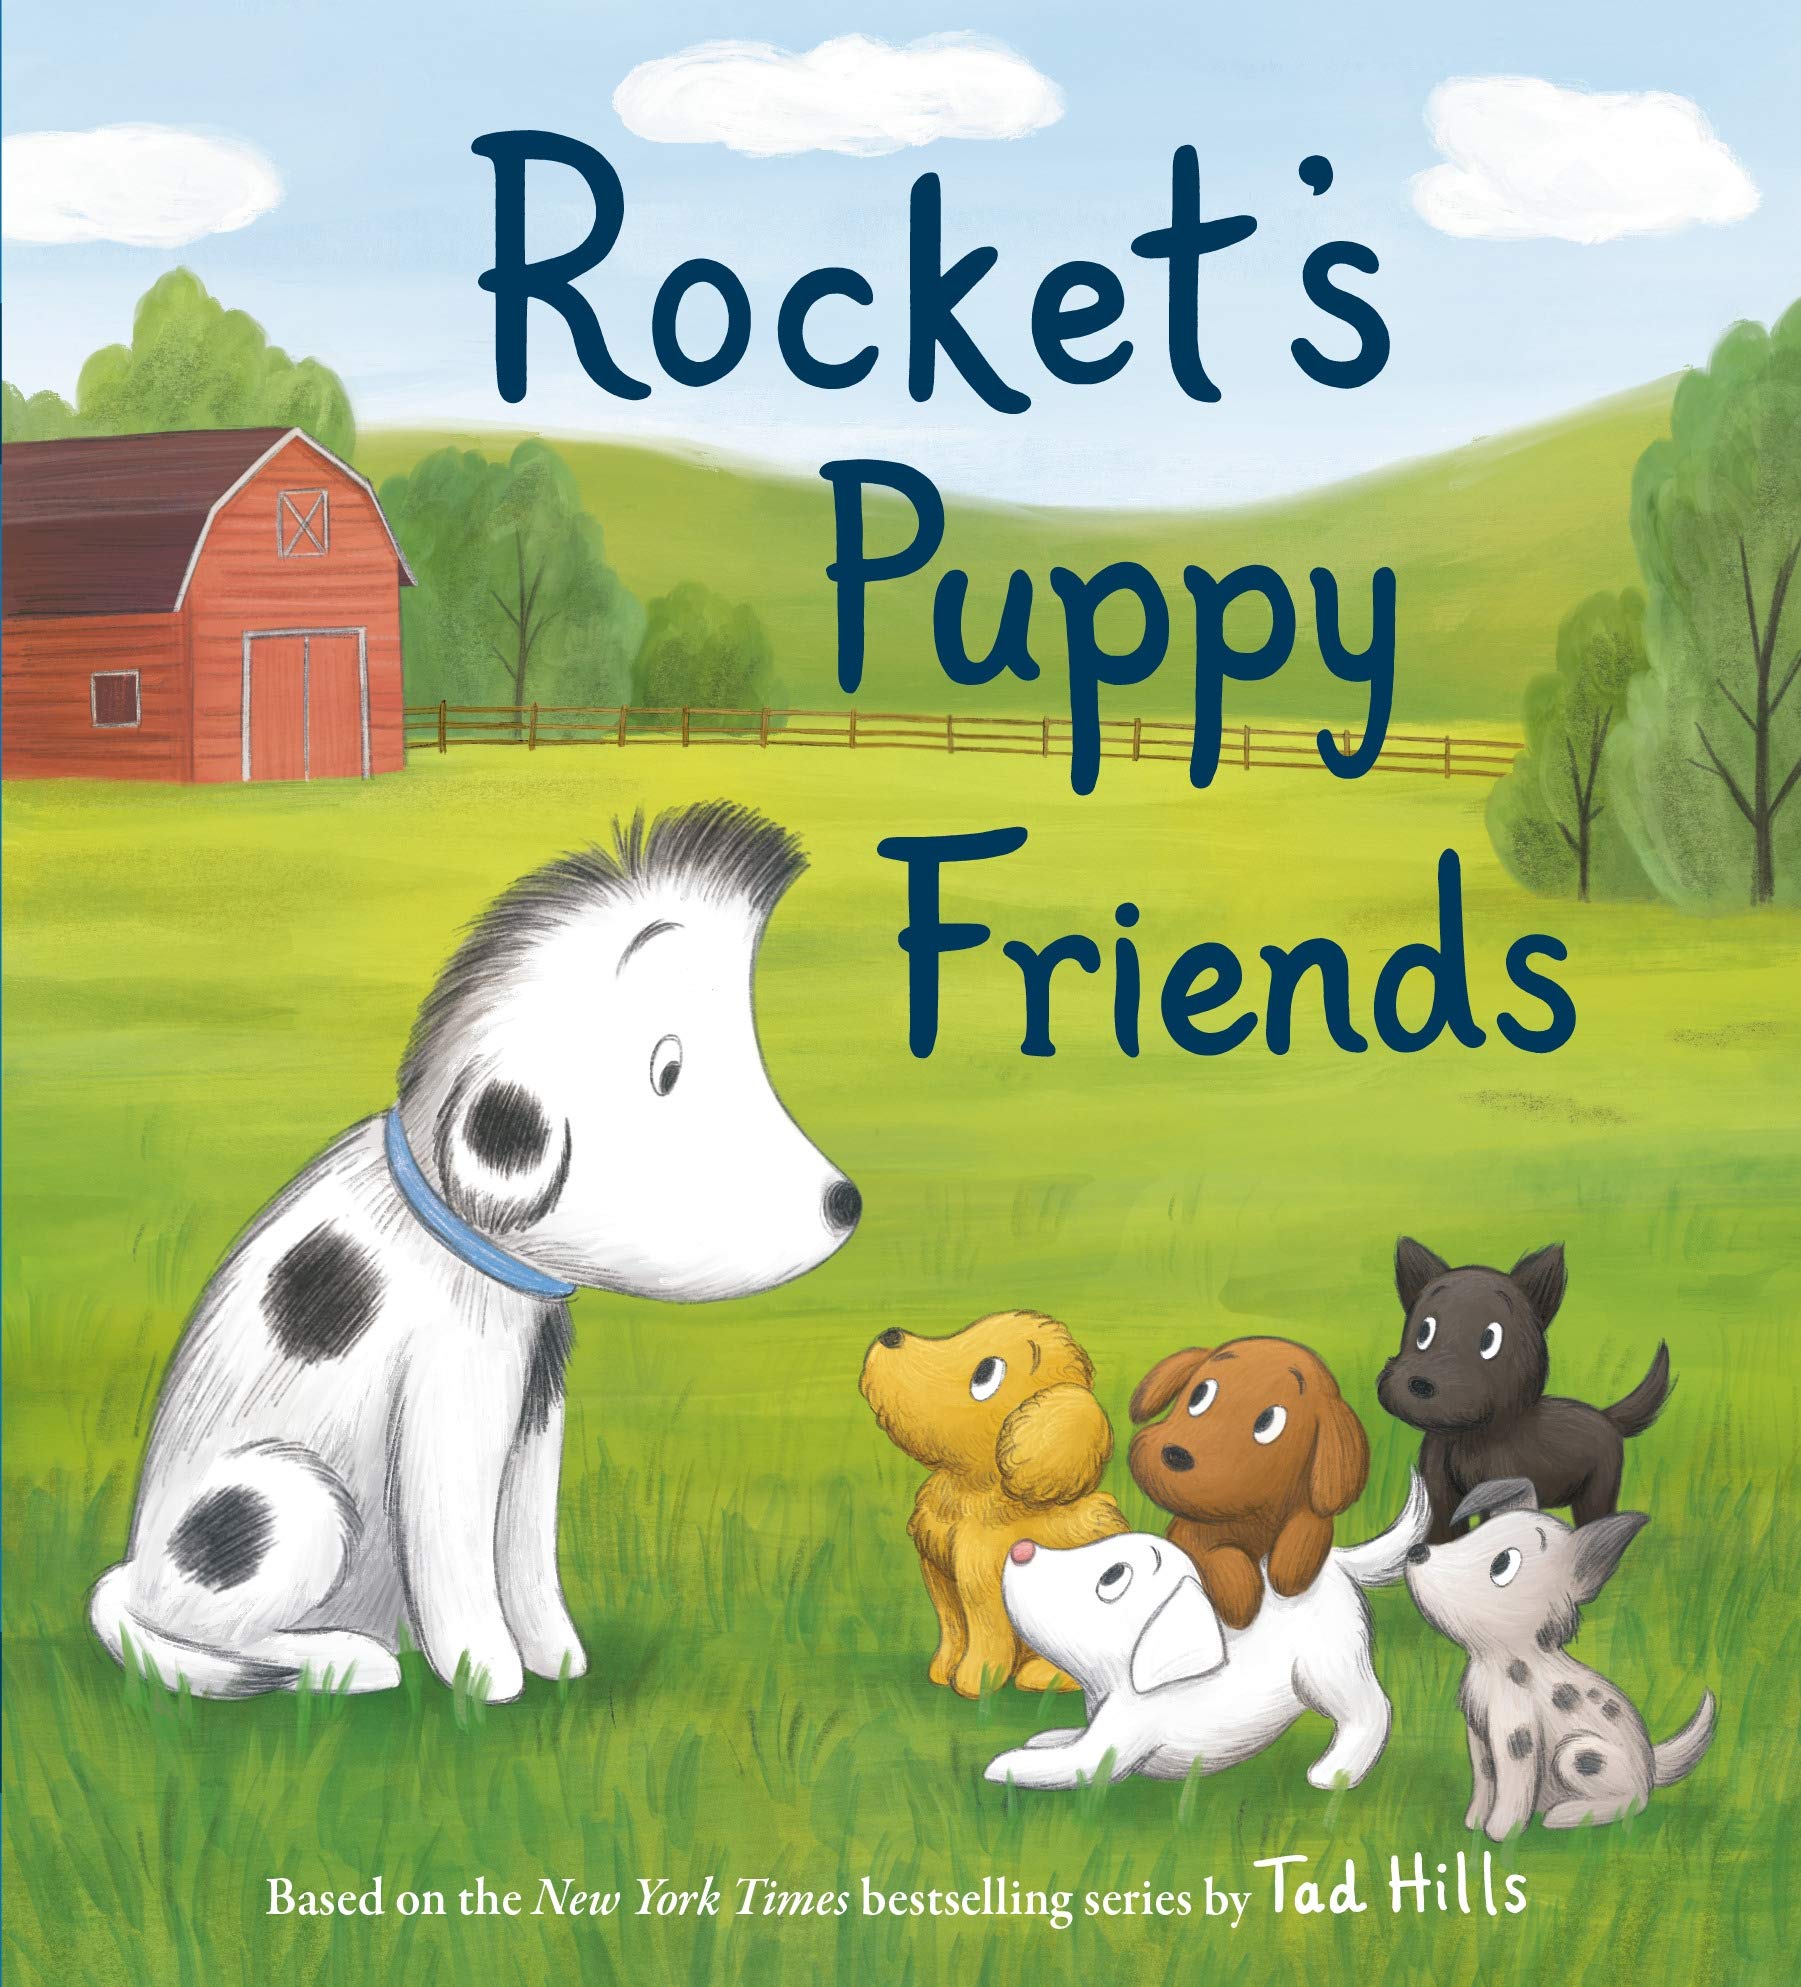 Rocket's Puppy Friends - Treasure Island Toys